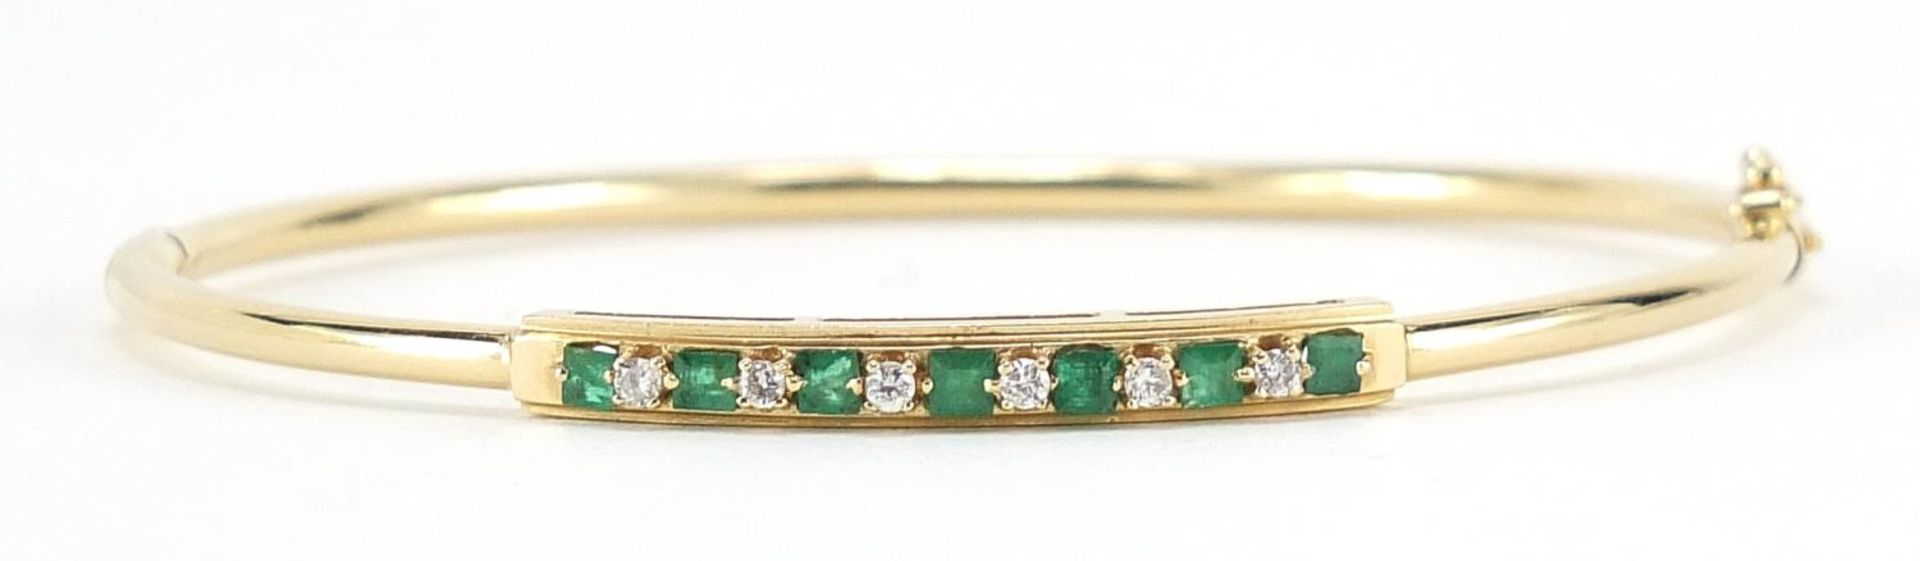 14ct gold emerald and diamond bangle, 6.3cm in diameter, 5.5g